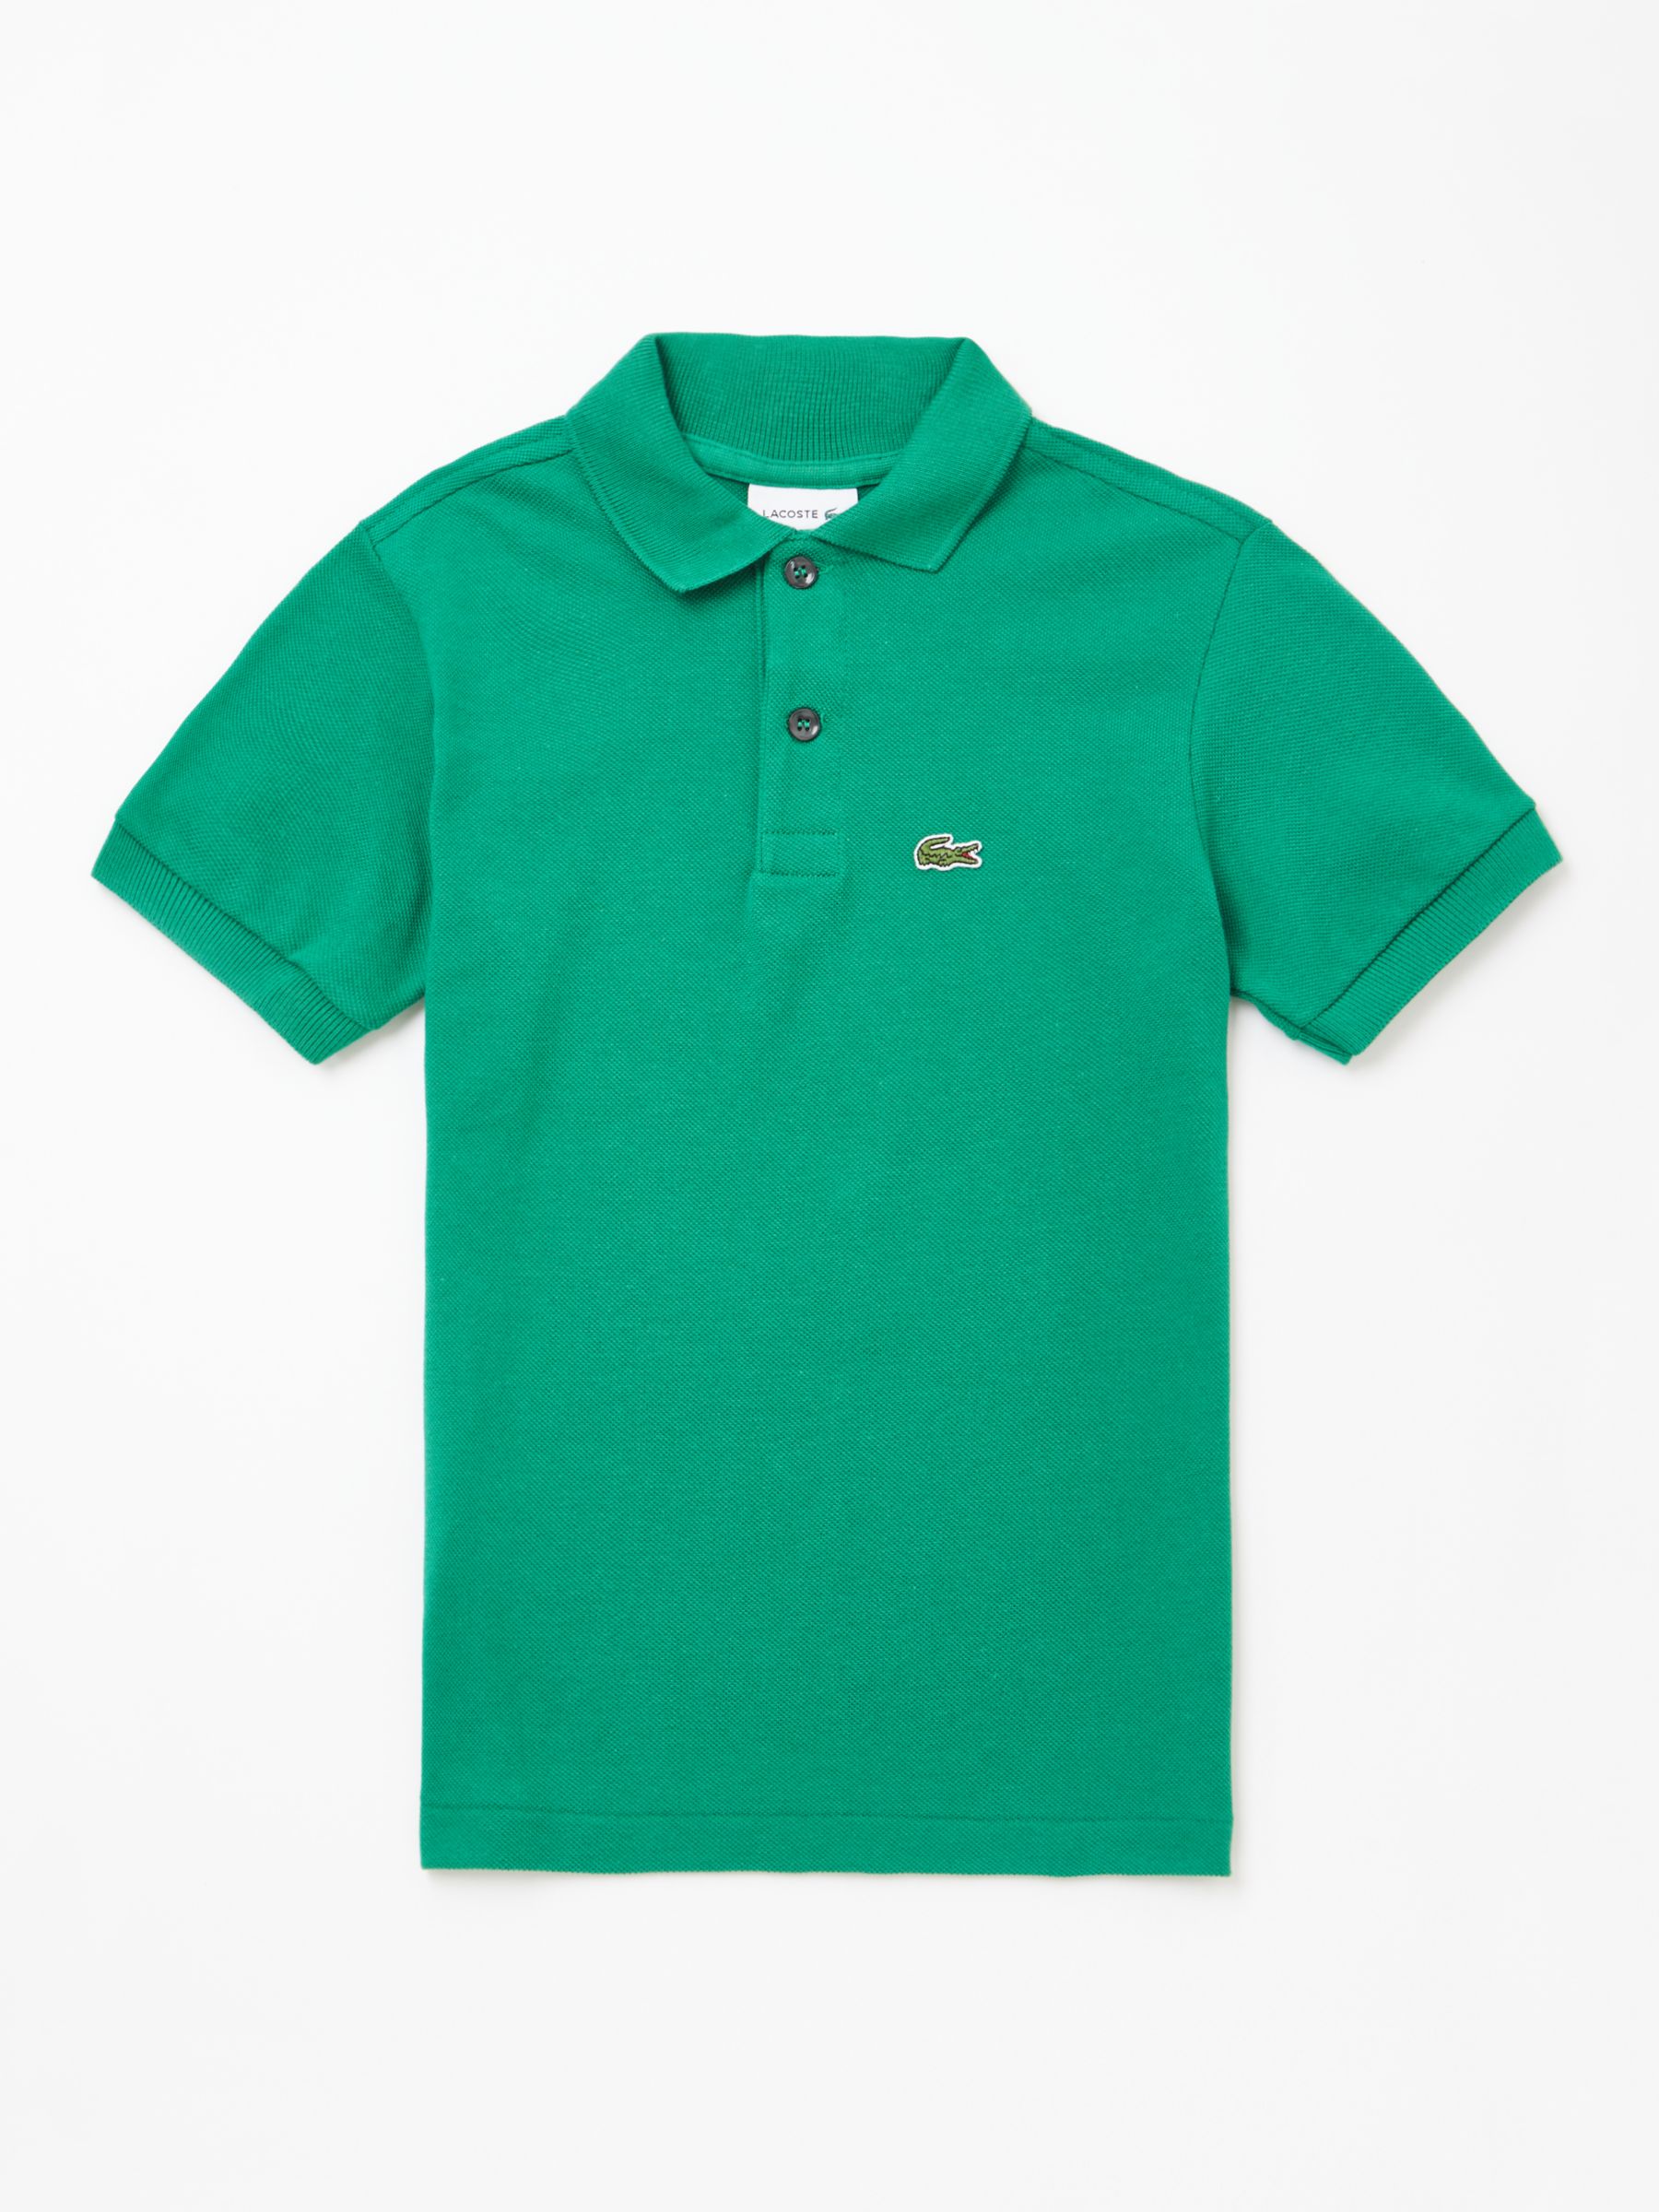 Lacoste Boys' Polo Shirt at John Lewis & Partners